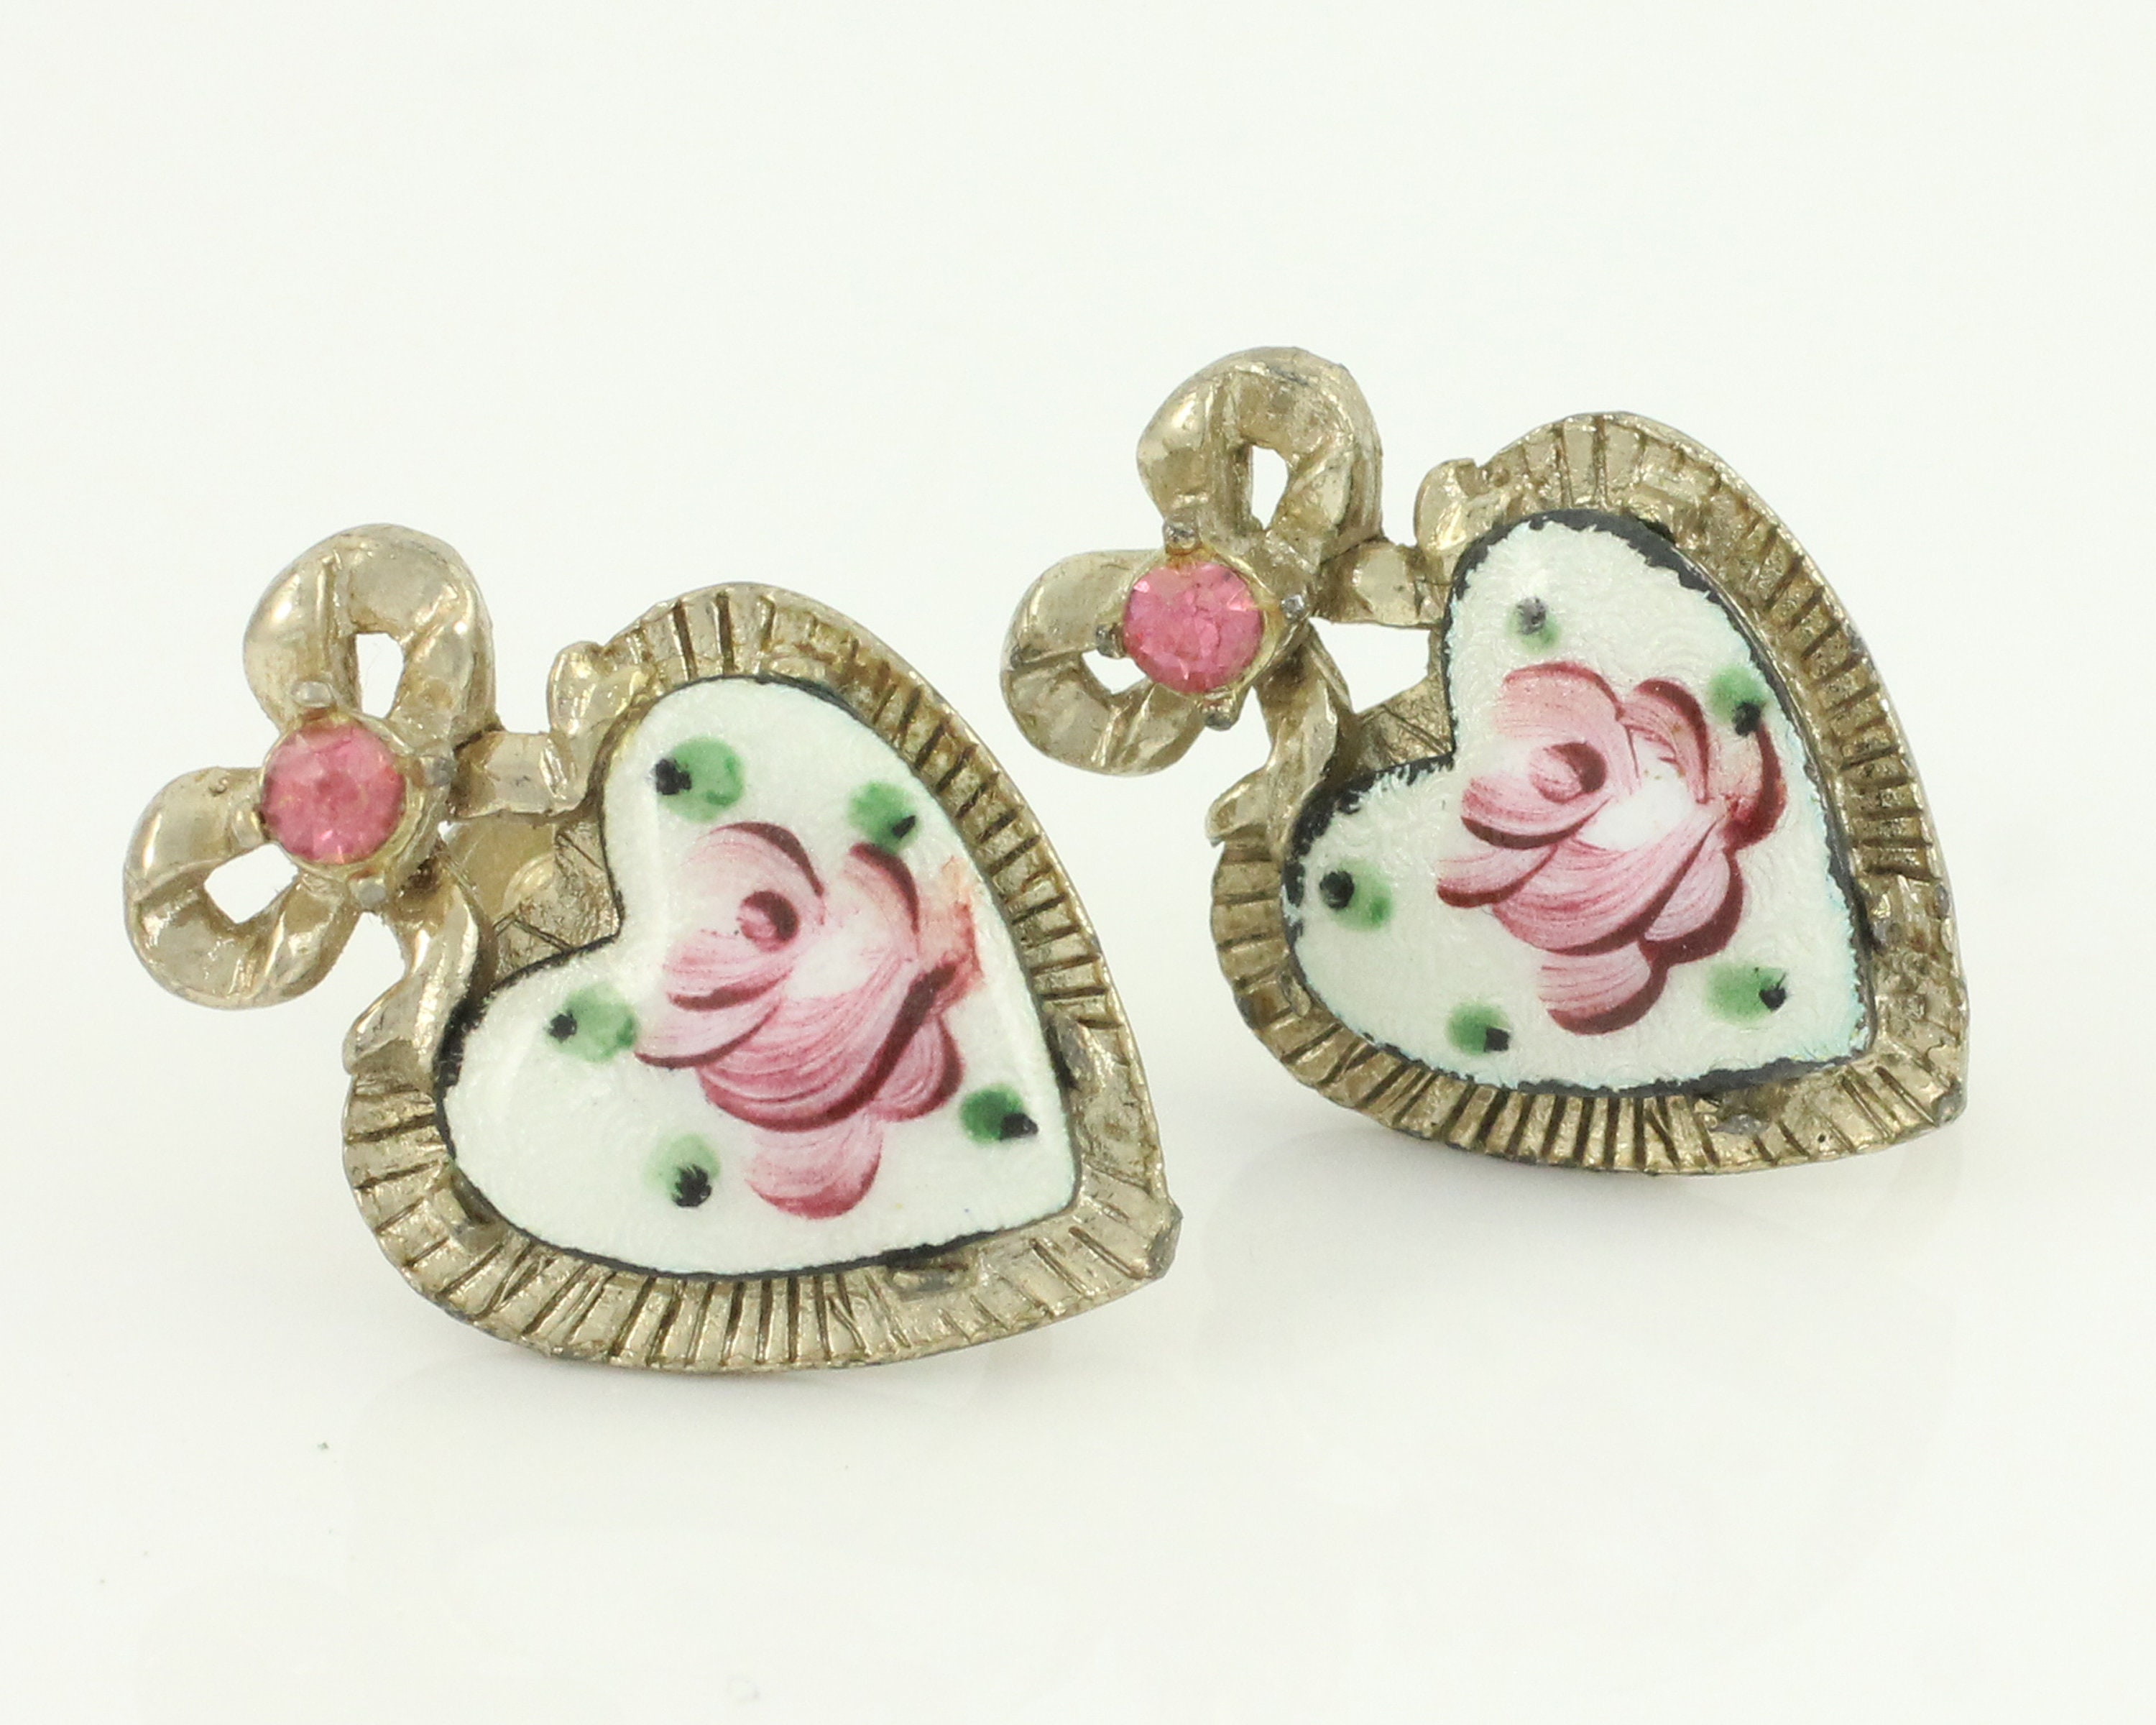 Cora shabby chic baby pink ribbon heart earrings – fille et fleurs